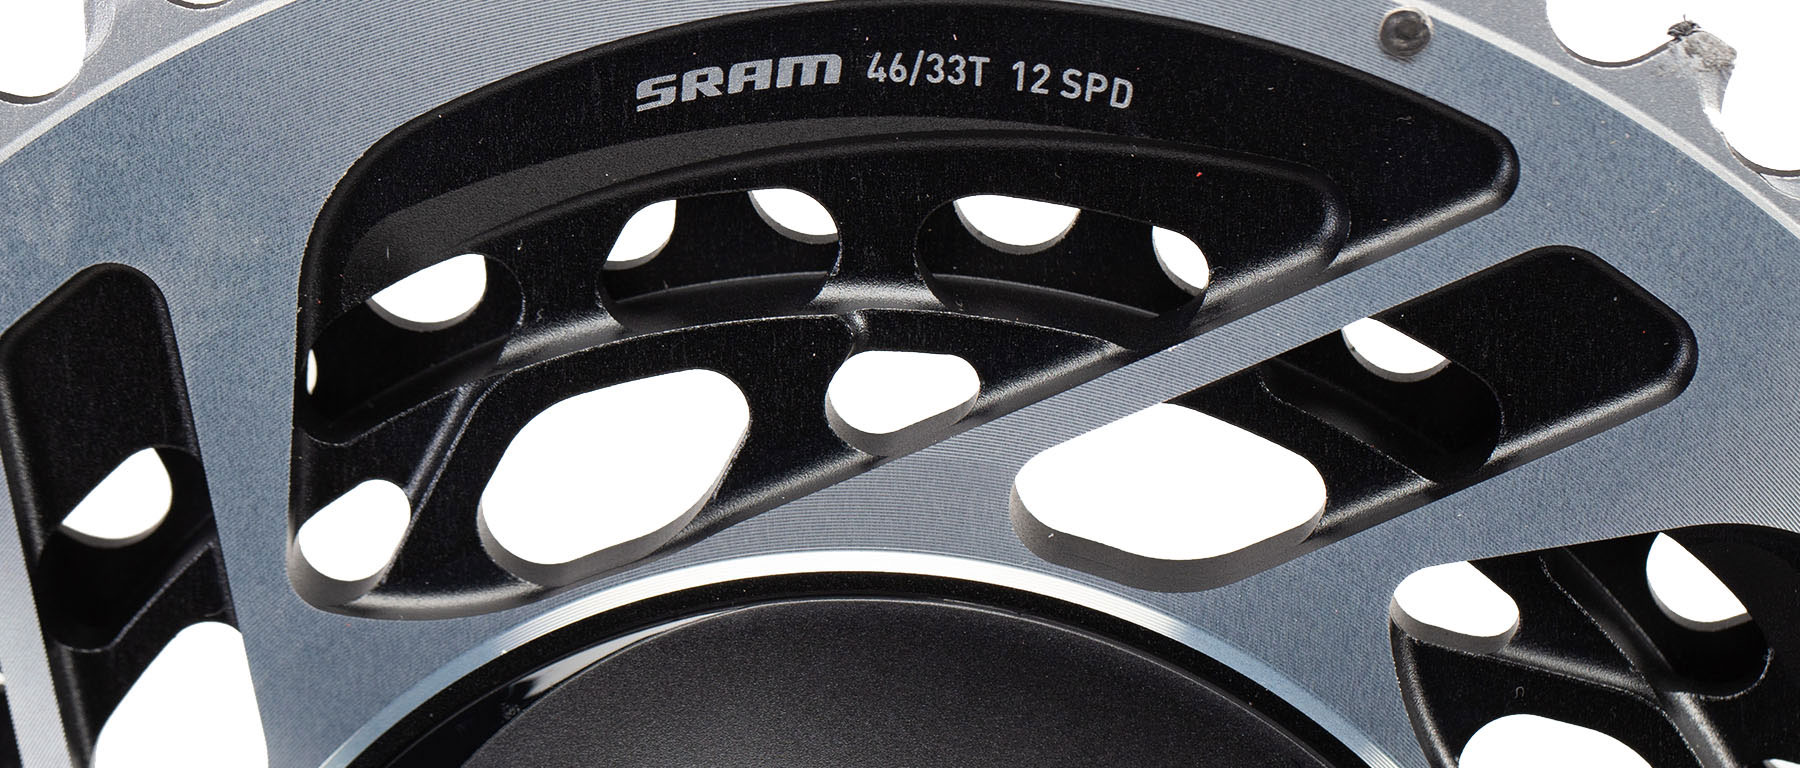 SRAM Red AXS DUB Power Meter 12-Speed Crankset